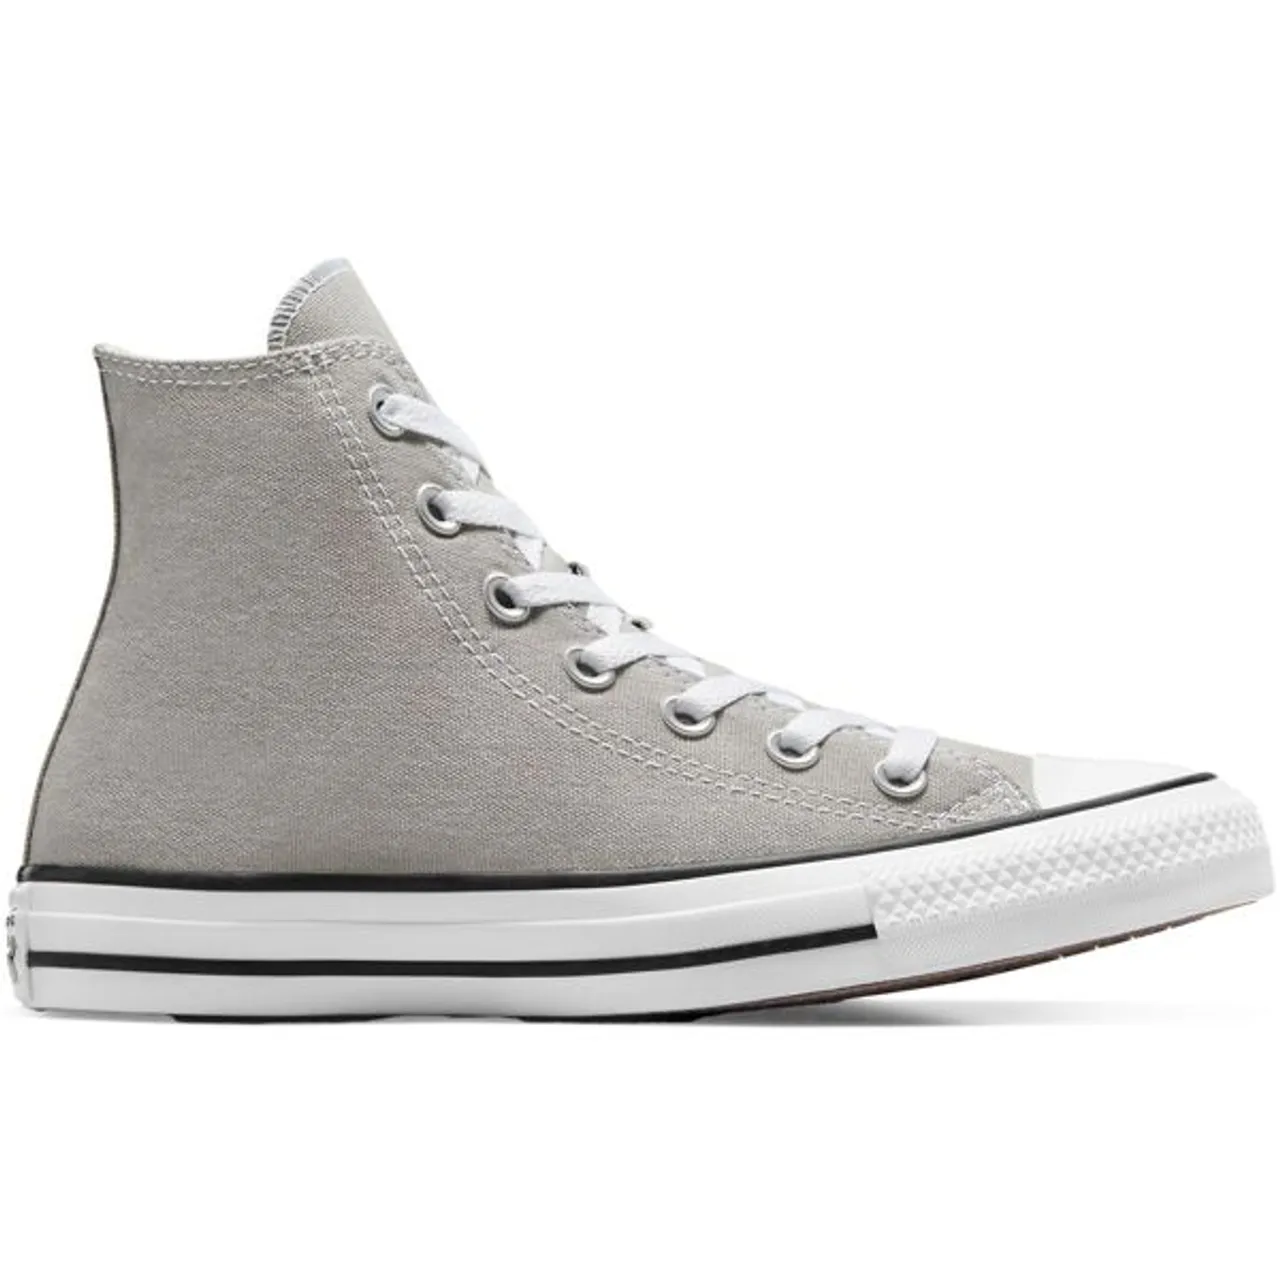 Sneaker CONVERSE "CHUCK TAYLOR ALL STAR" Gr. 42, grau (totally neutral) Schuhe Bekleidung